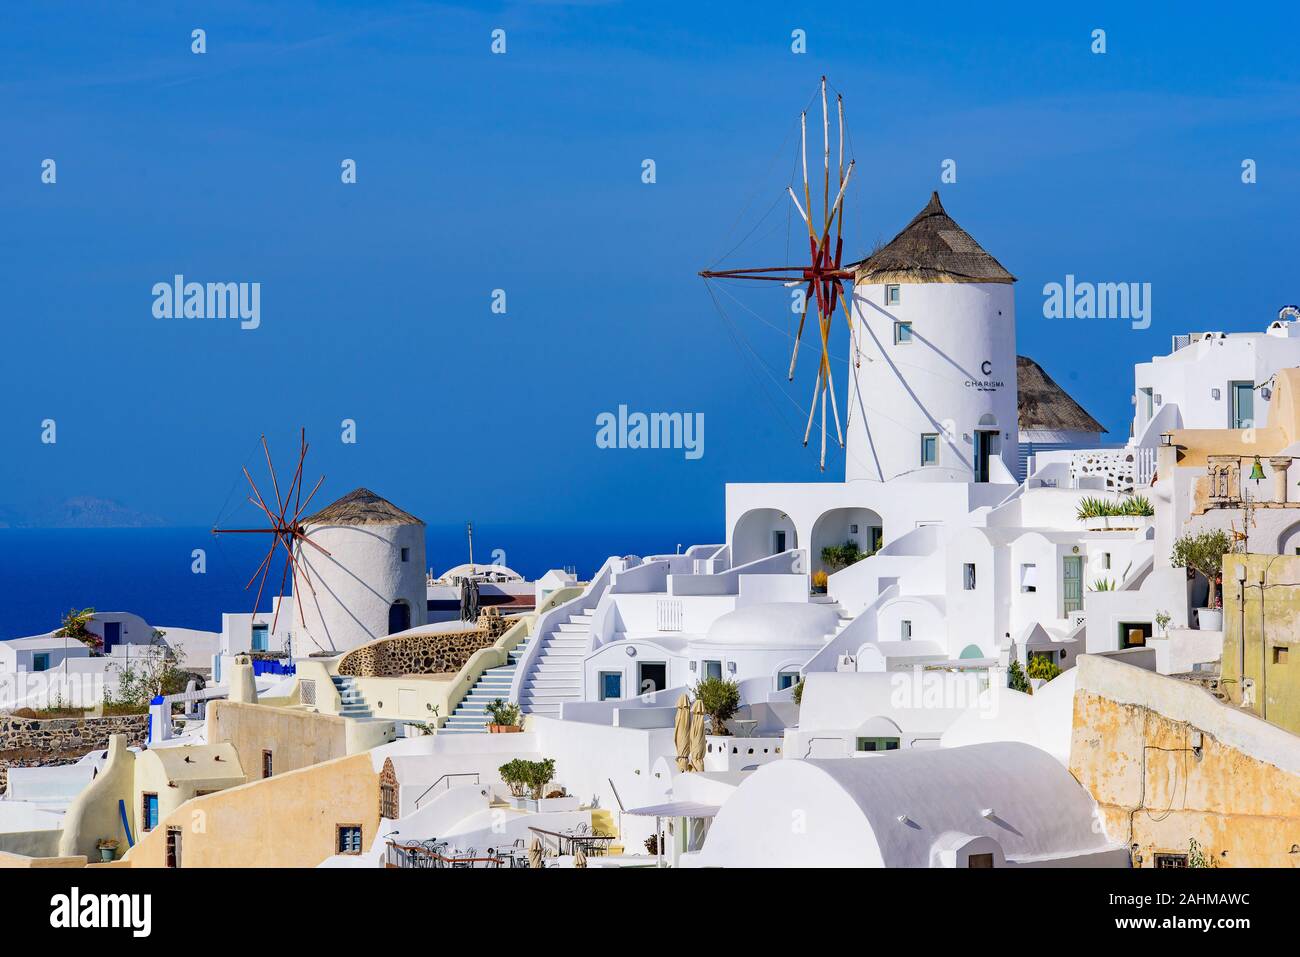 Windmill and traditional white buildings facing Mediterranean Sea in Oia, Santorini, Greece Stock Photo